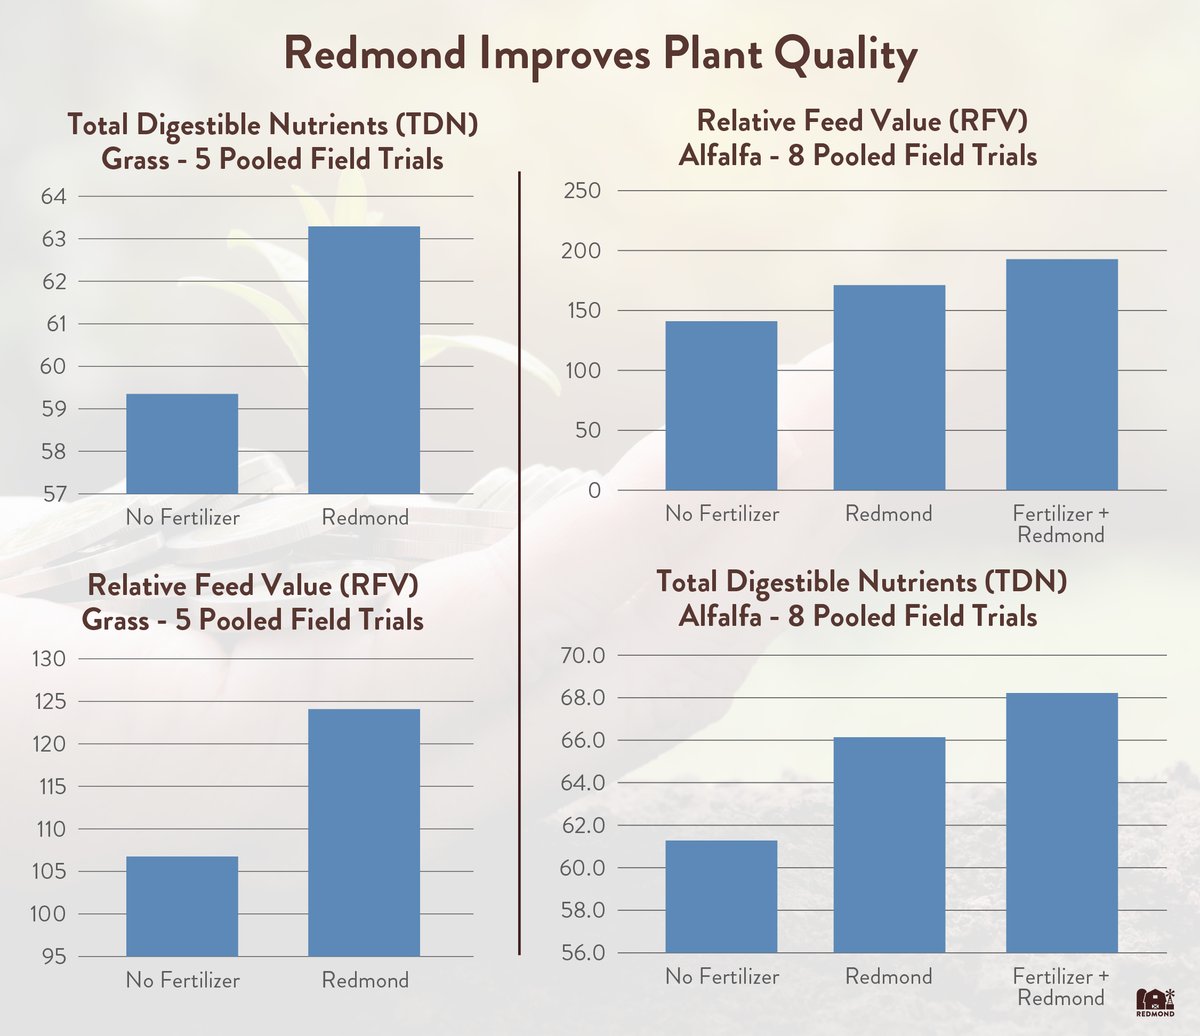 Redmond improves plant quality